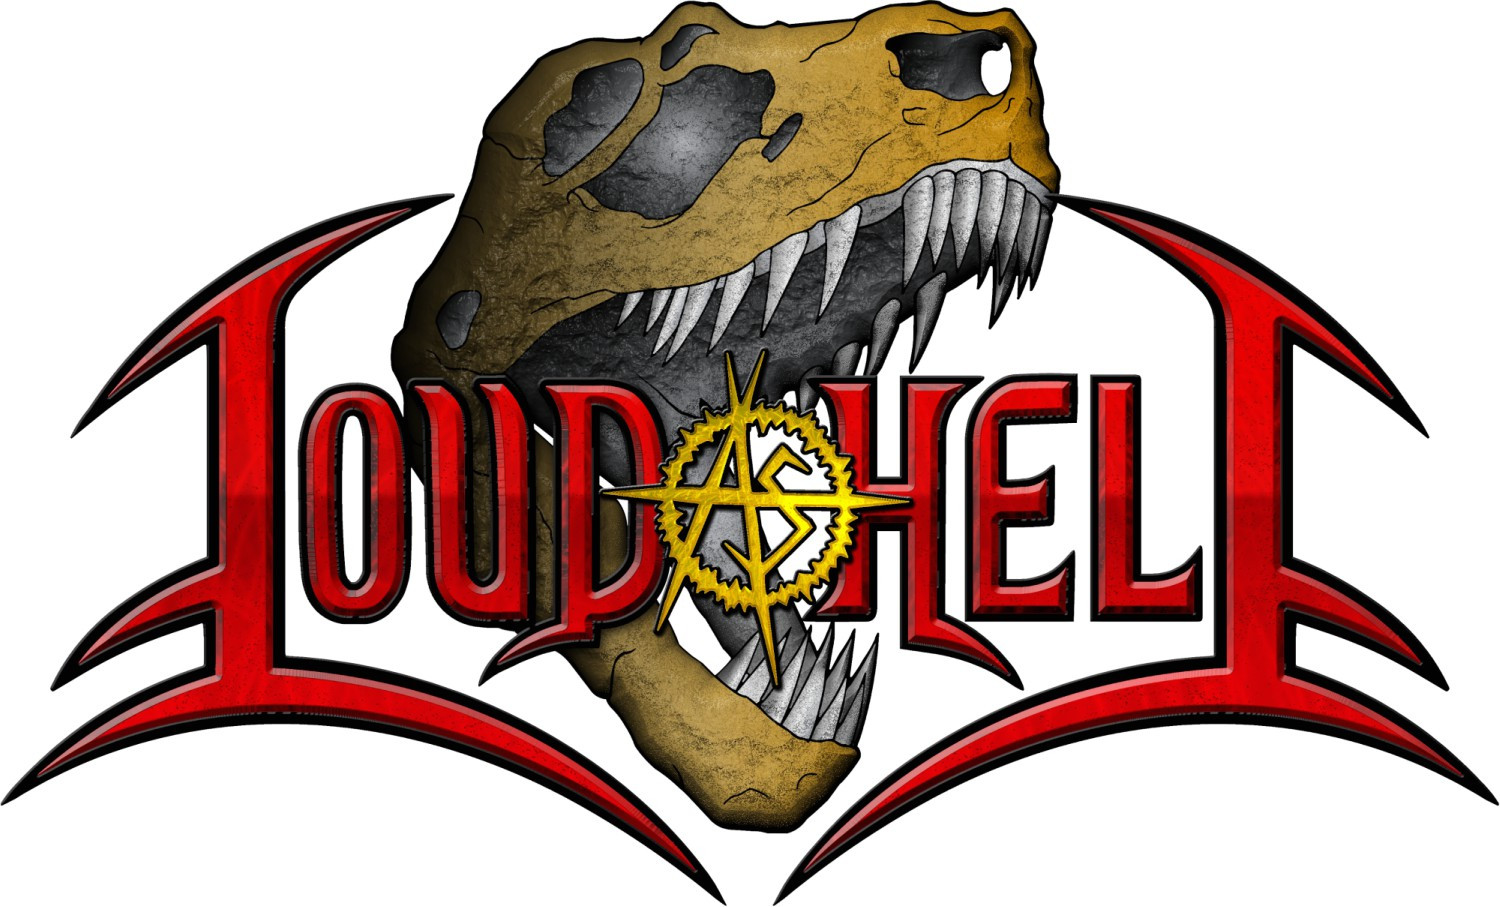 Loud As Hell logo